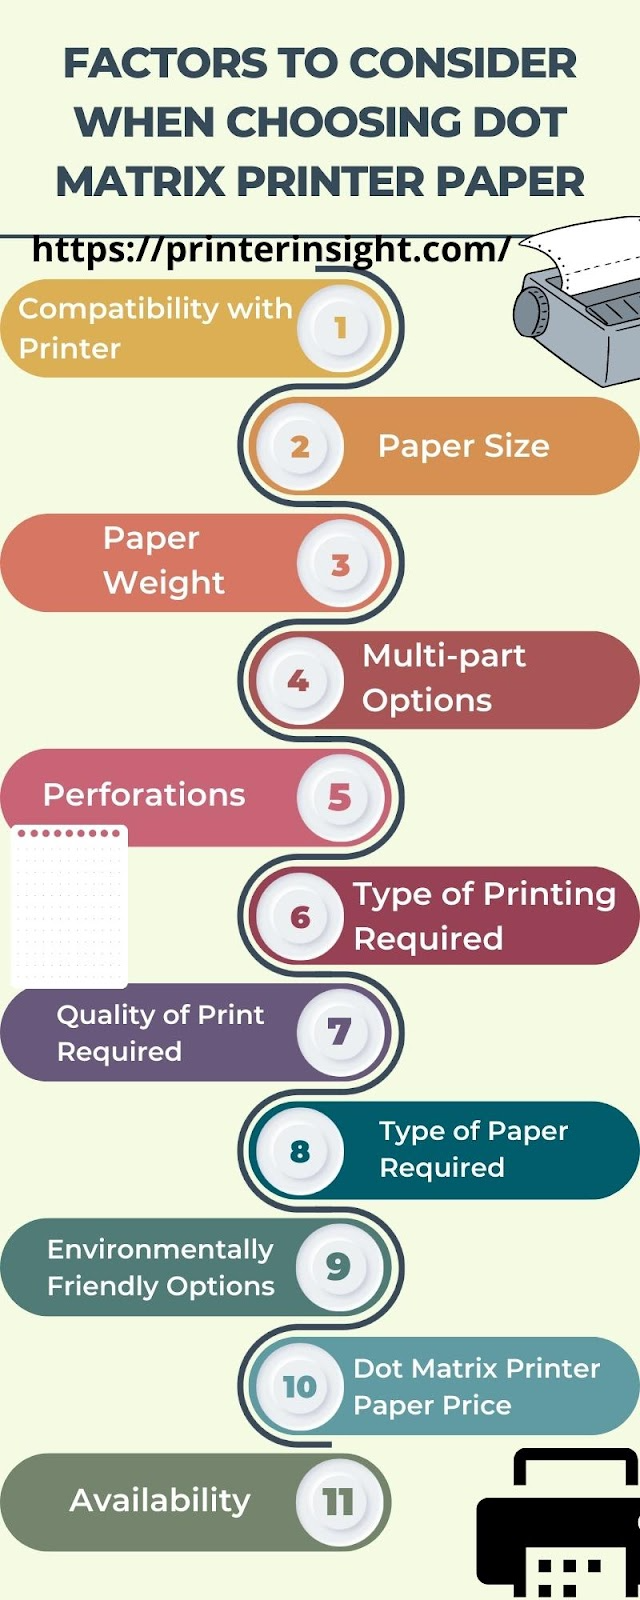 Factors to Consider When Choosing Dot Matrix Printer Paper